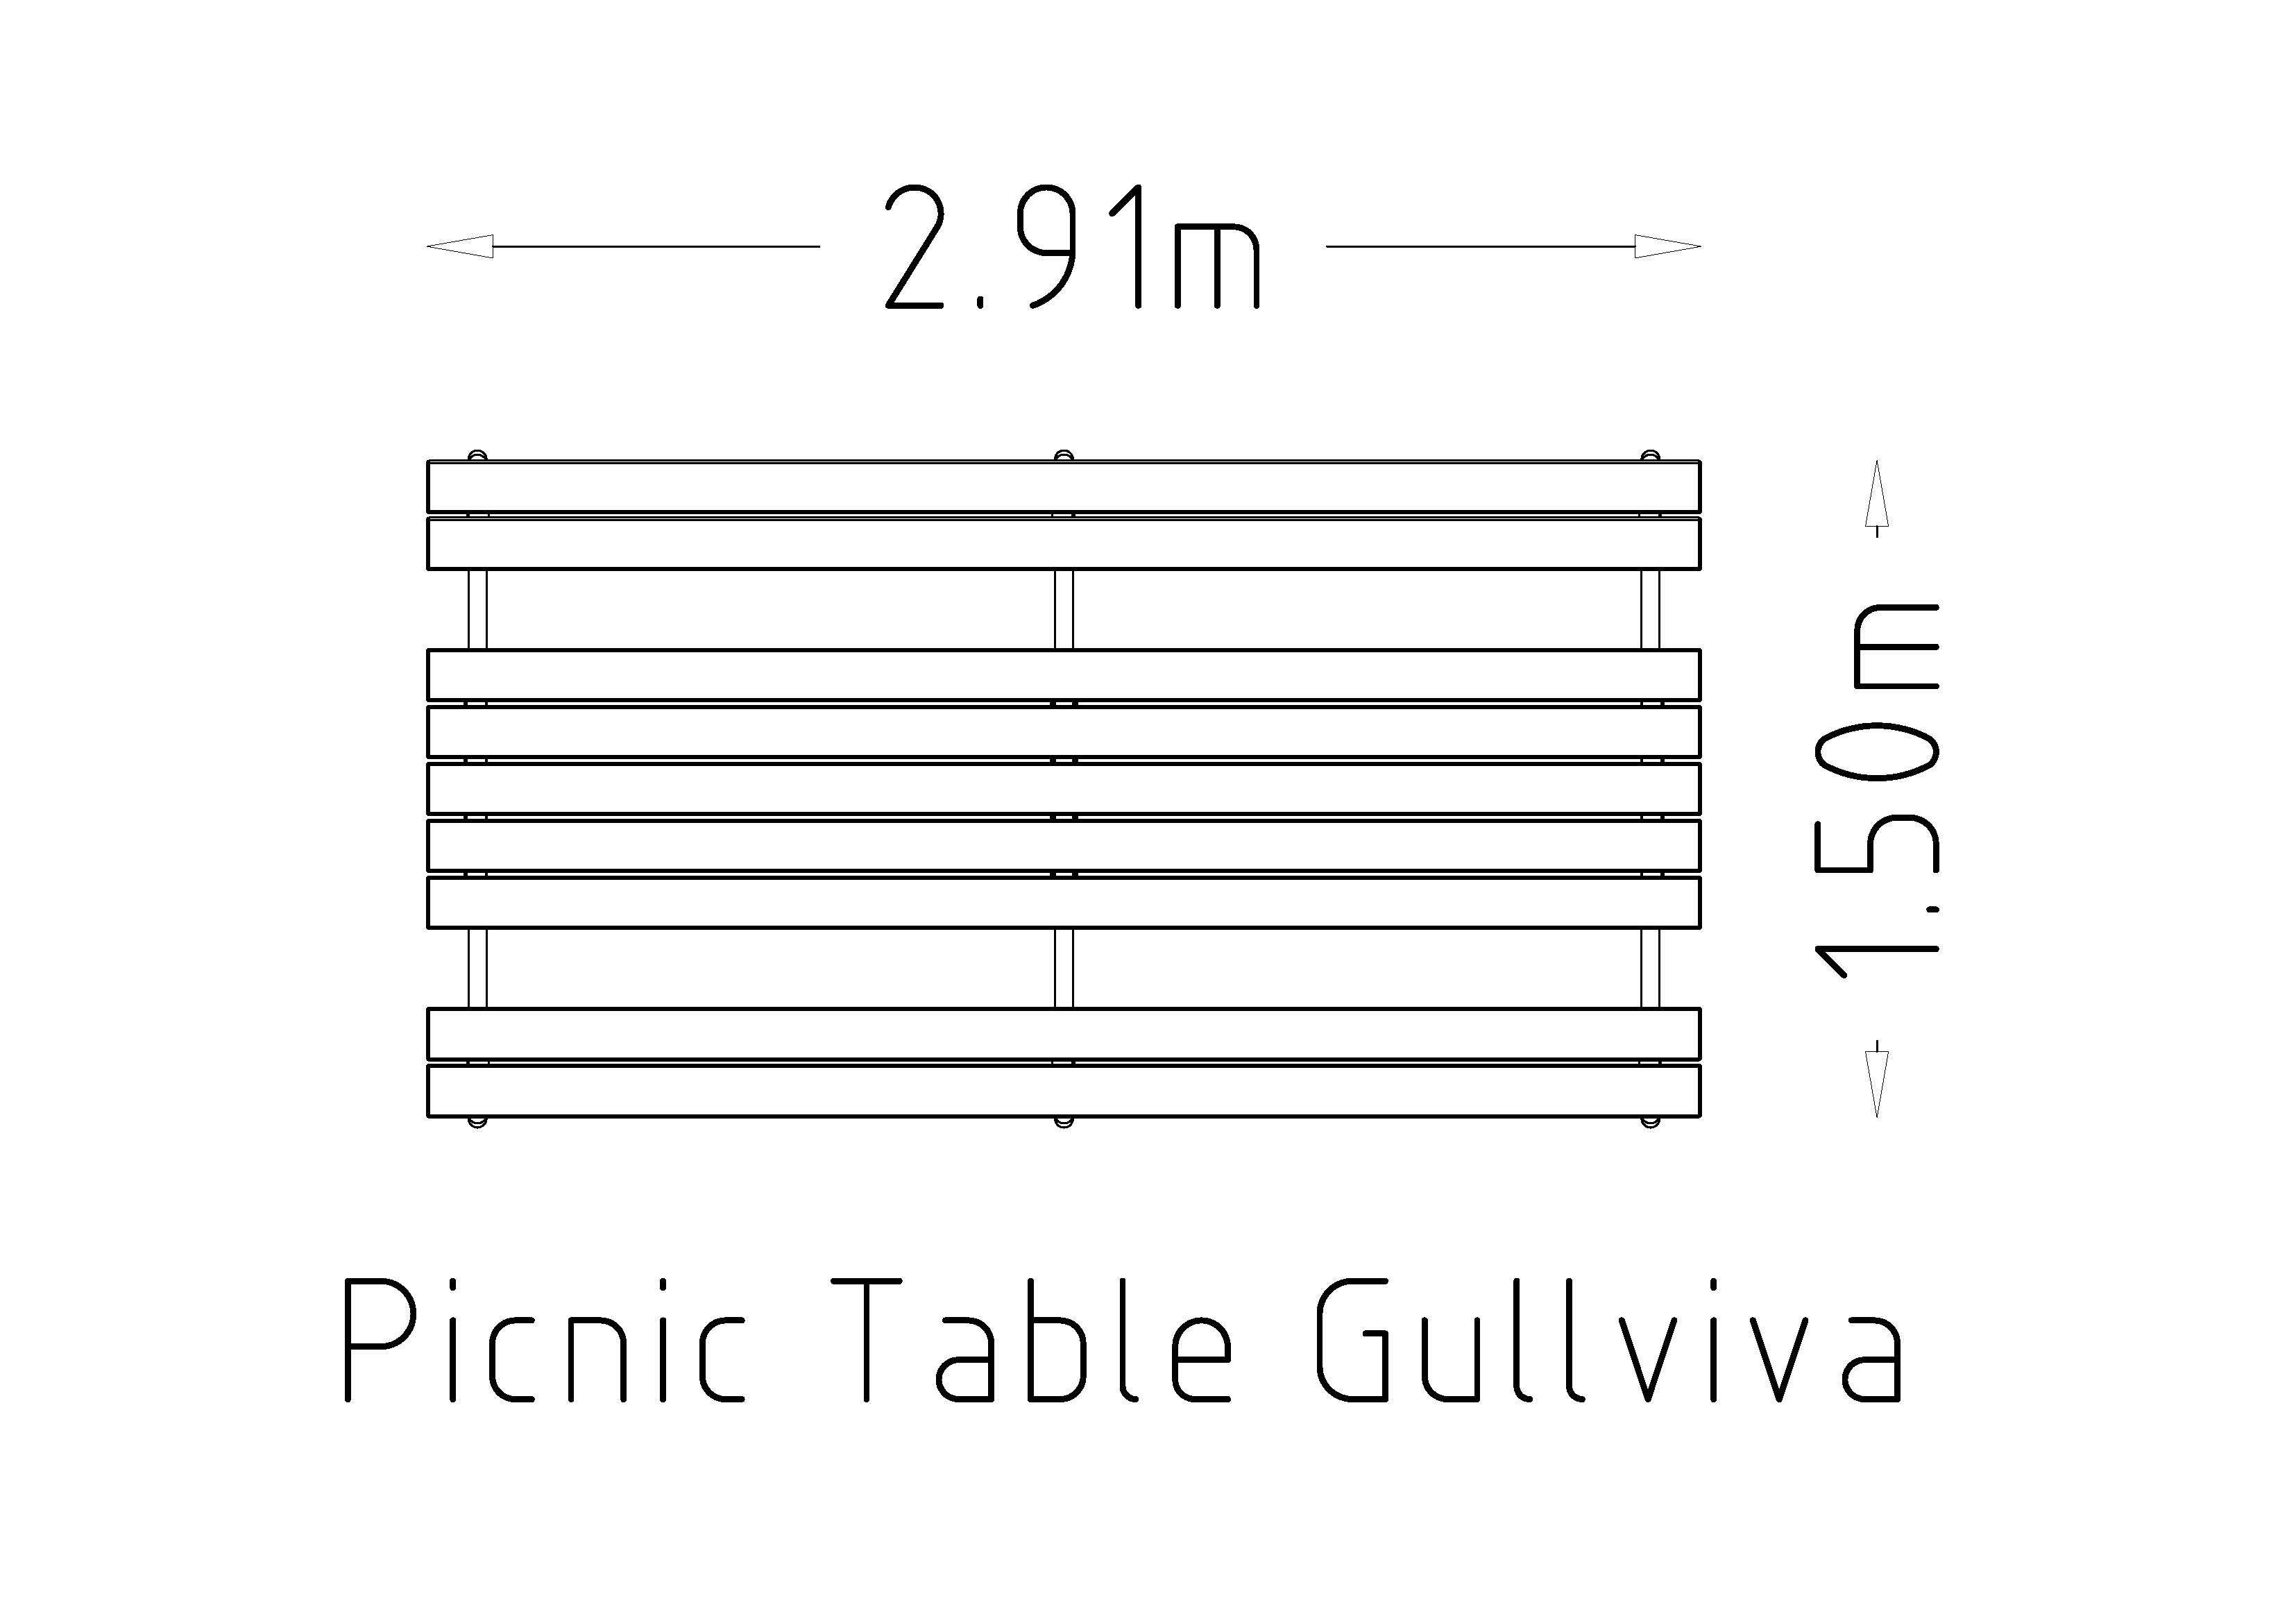 Picnic Table Gullviva